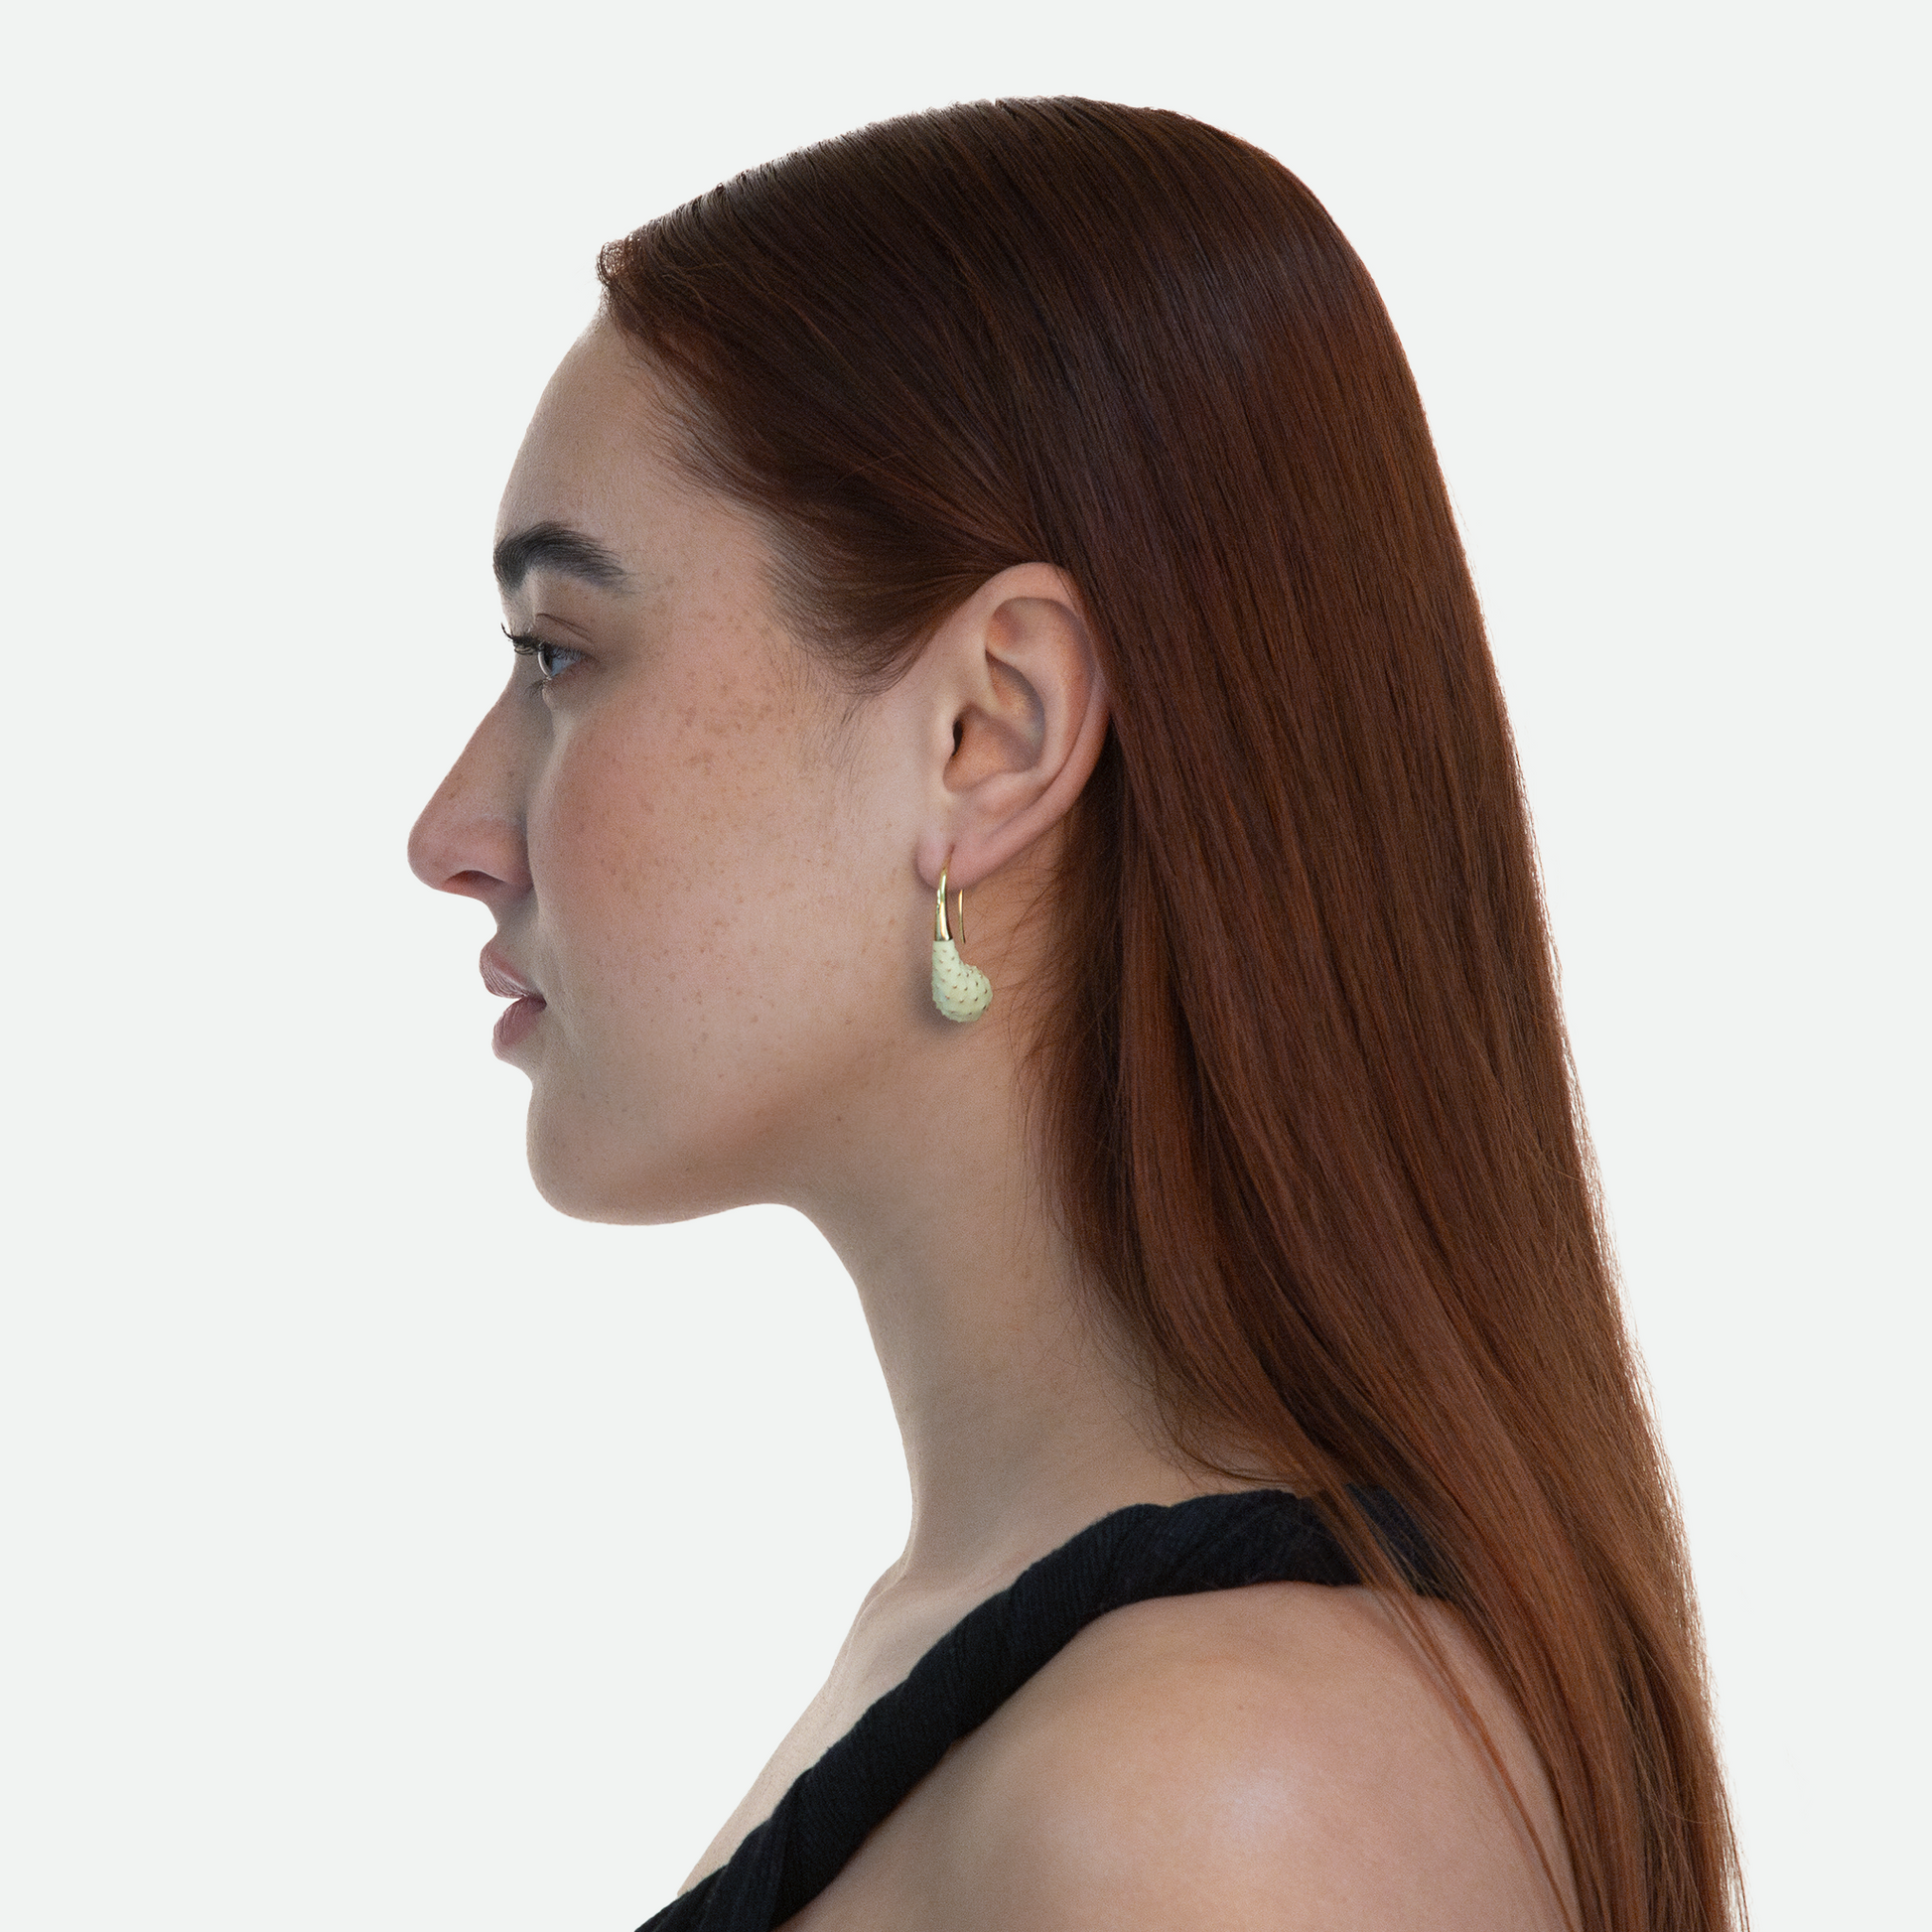 Side profile of model wearing Aspera earrings evoking opuntia fruit with golden stem, designed by Ruggeri, on a white background.